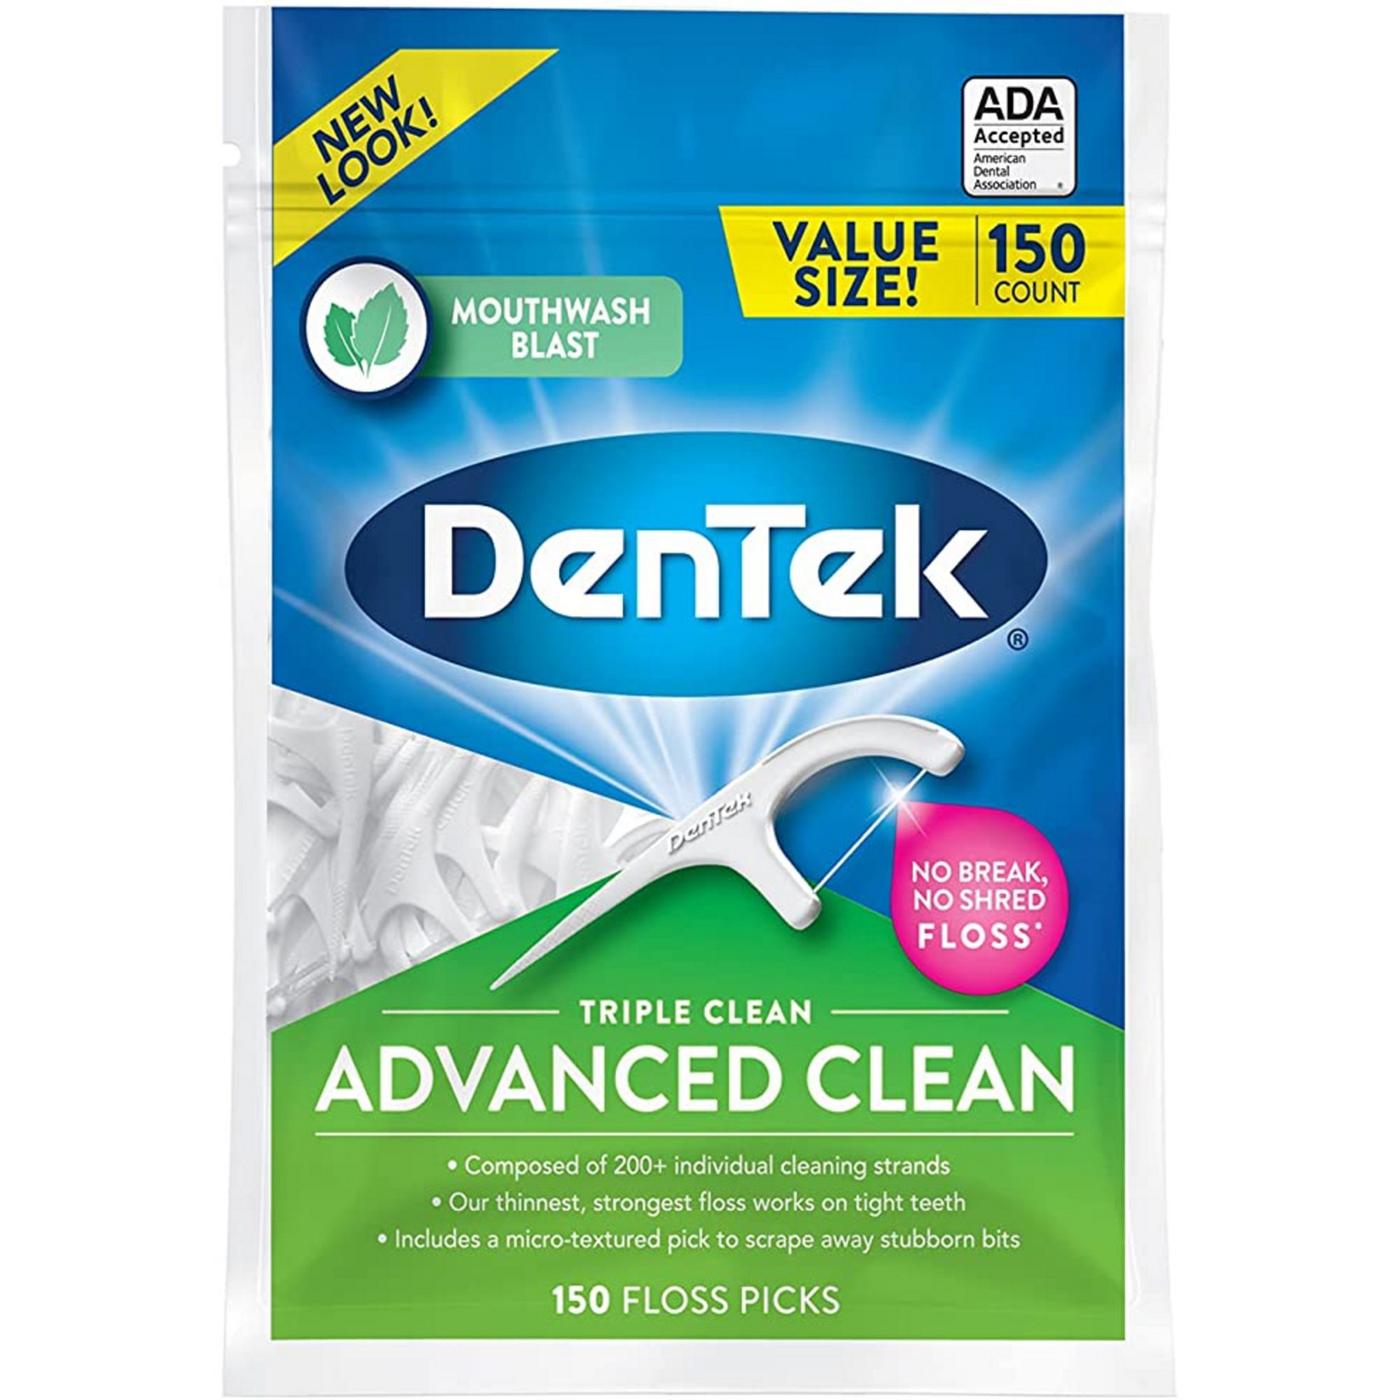 DenTek Triple Clean Advanced Clean Mouthwash Blast; image 1 of 5